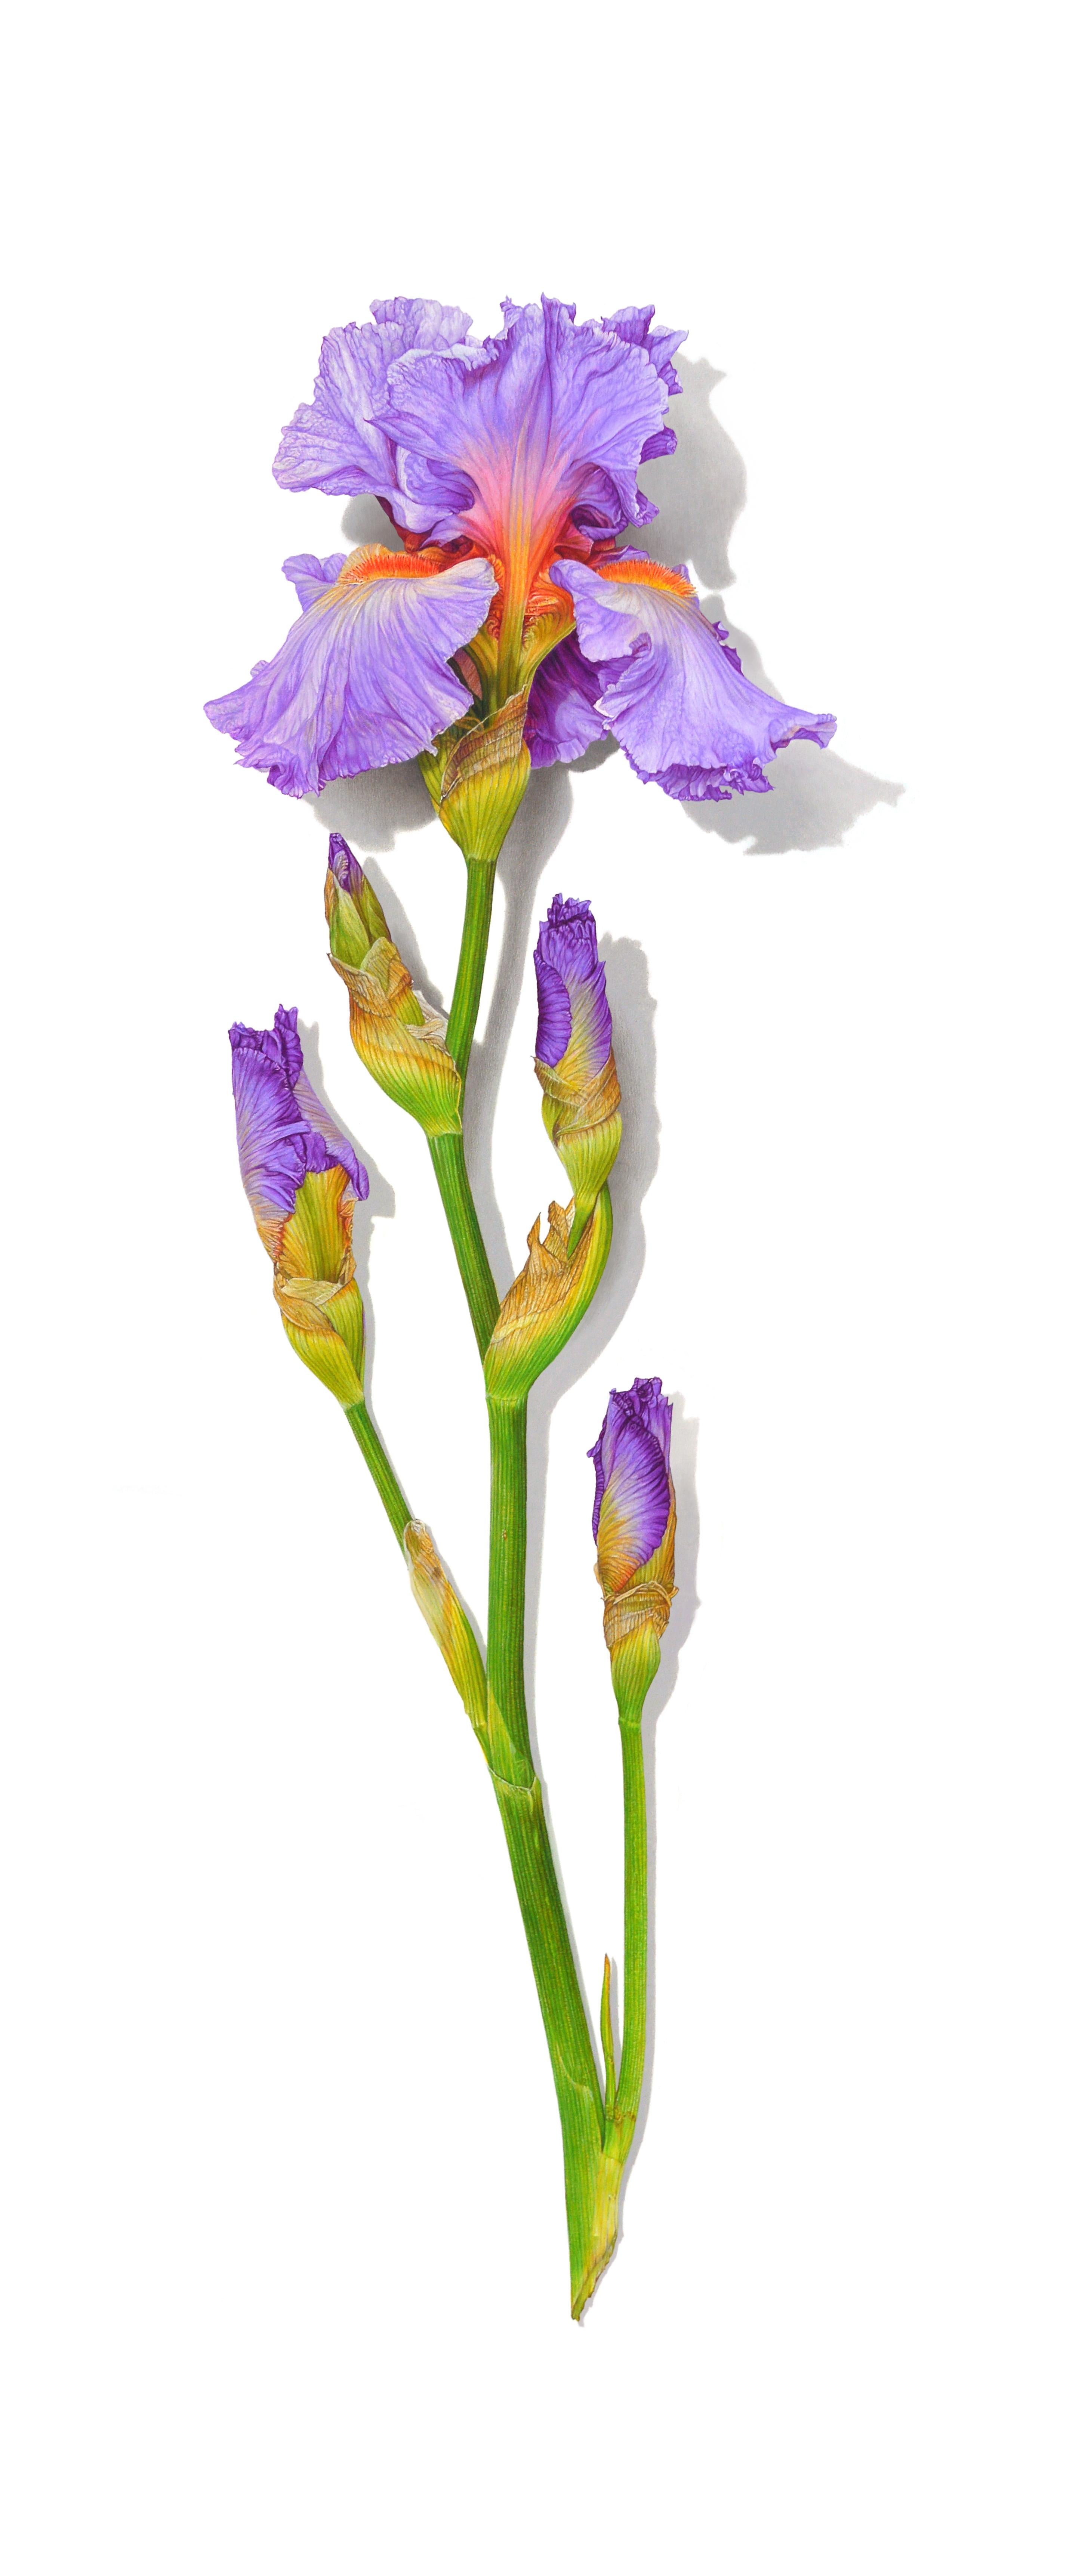 David Morrison Still-Life - Iris Series No. 5, photorealist floral still life drawing, colored pencil